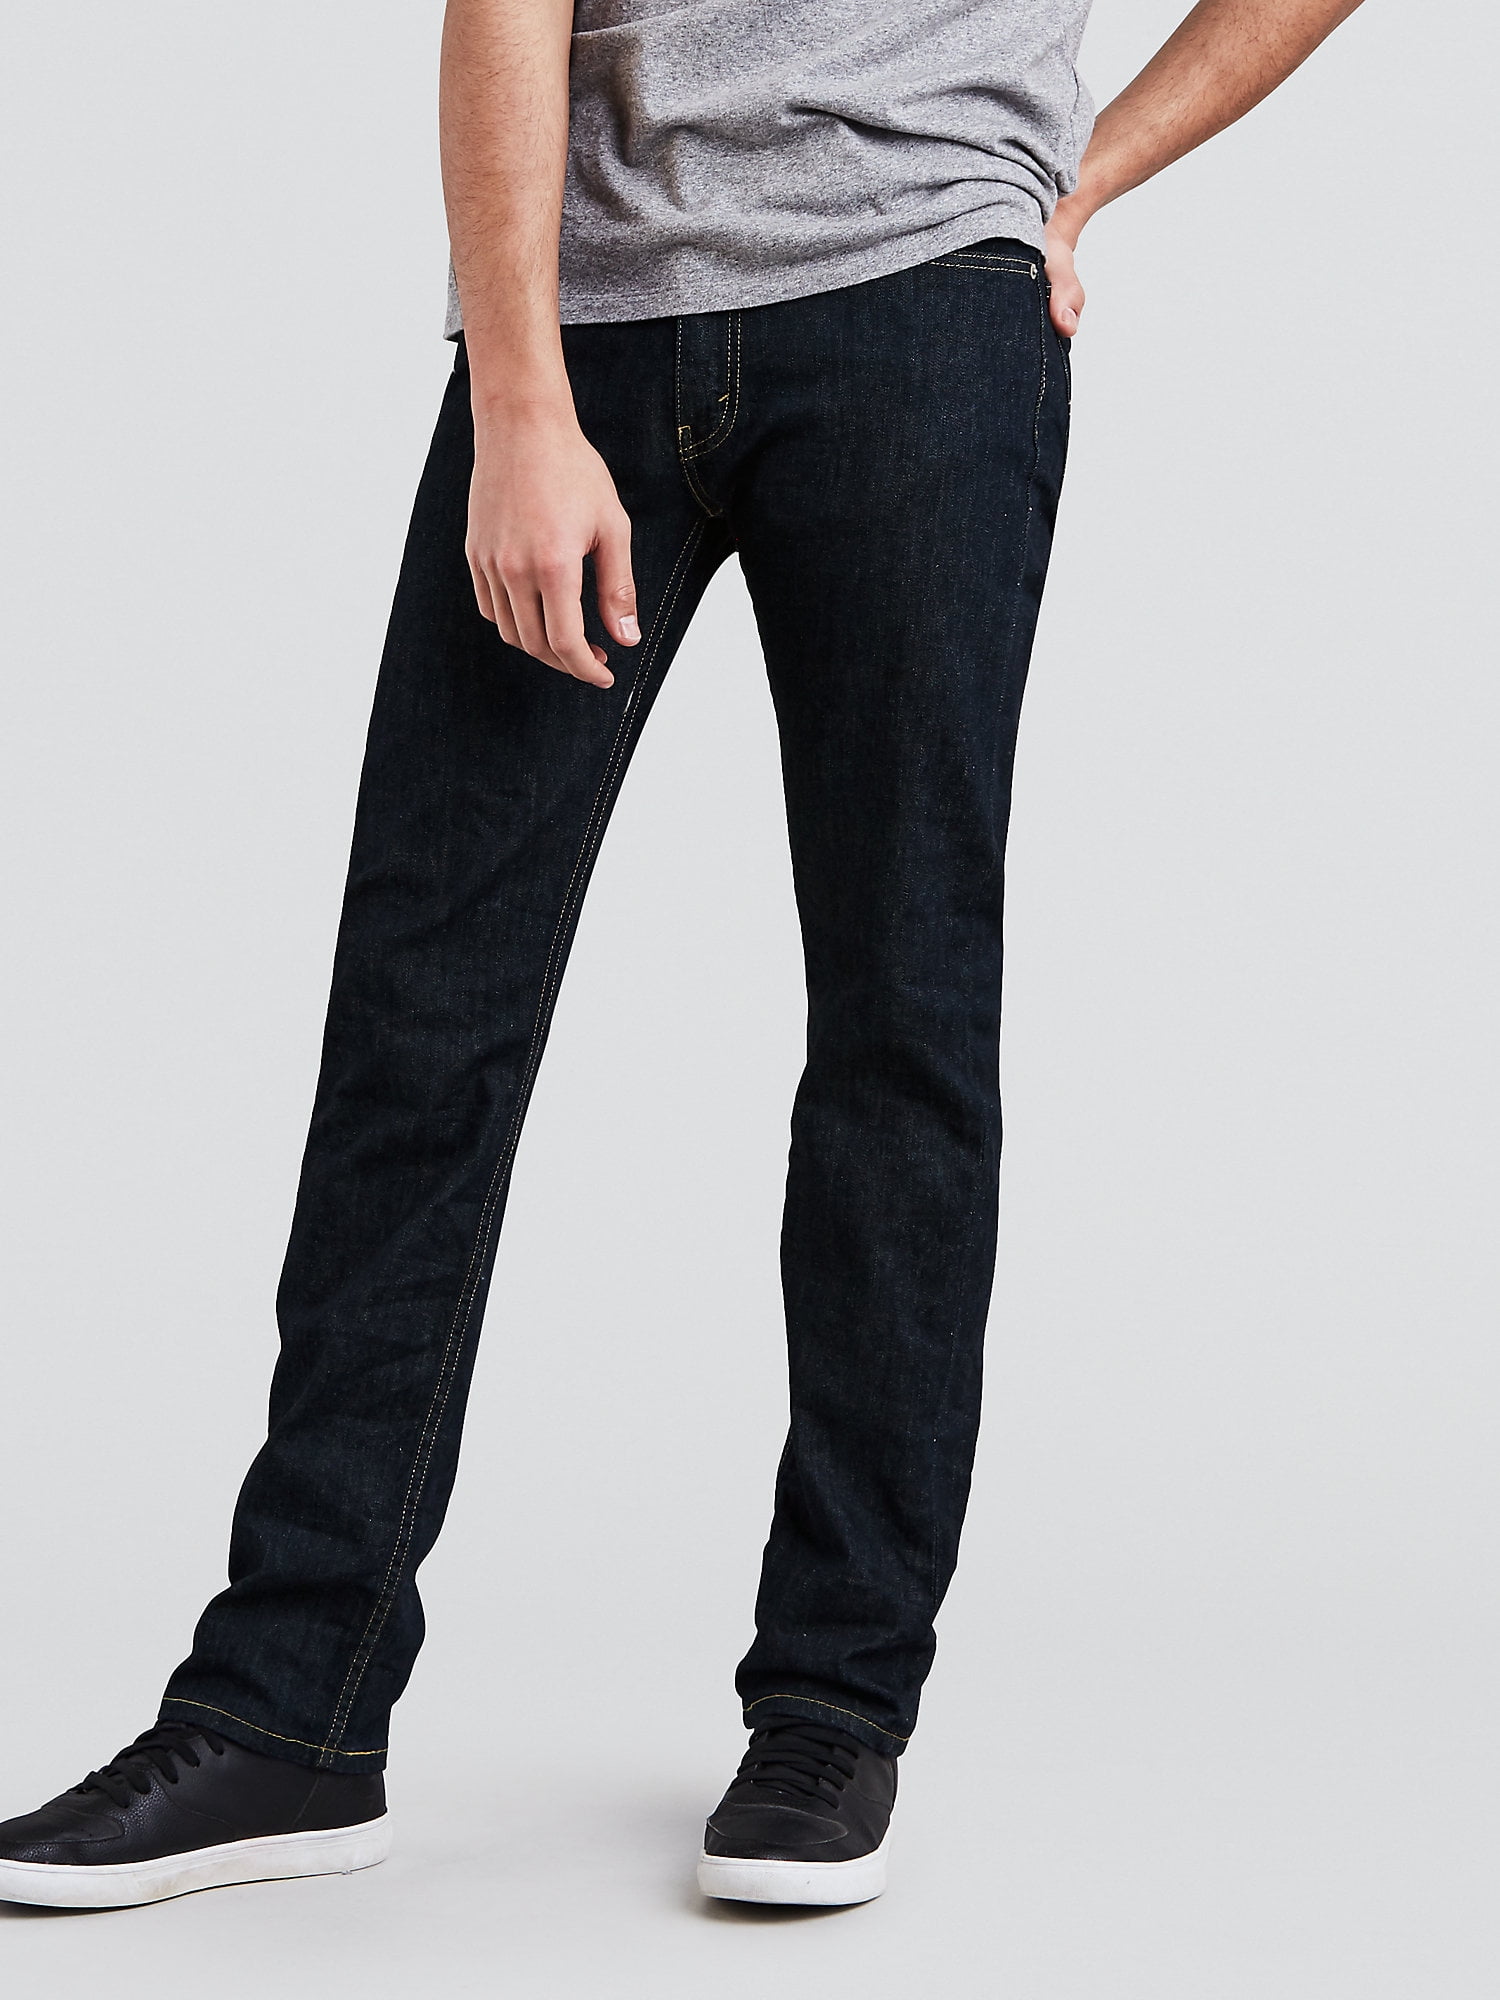 Levi's ~ 513 Slim Fit Men's Straight Trouser Pants $58 NWT 